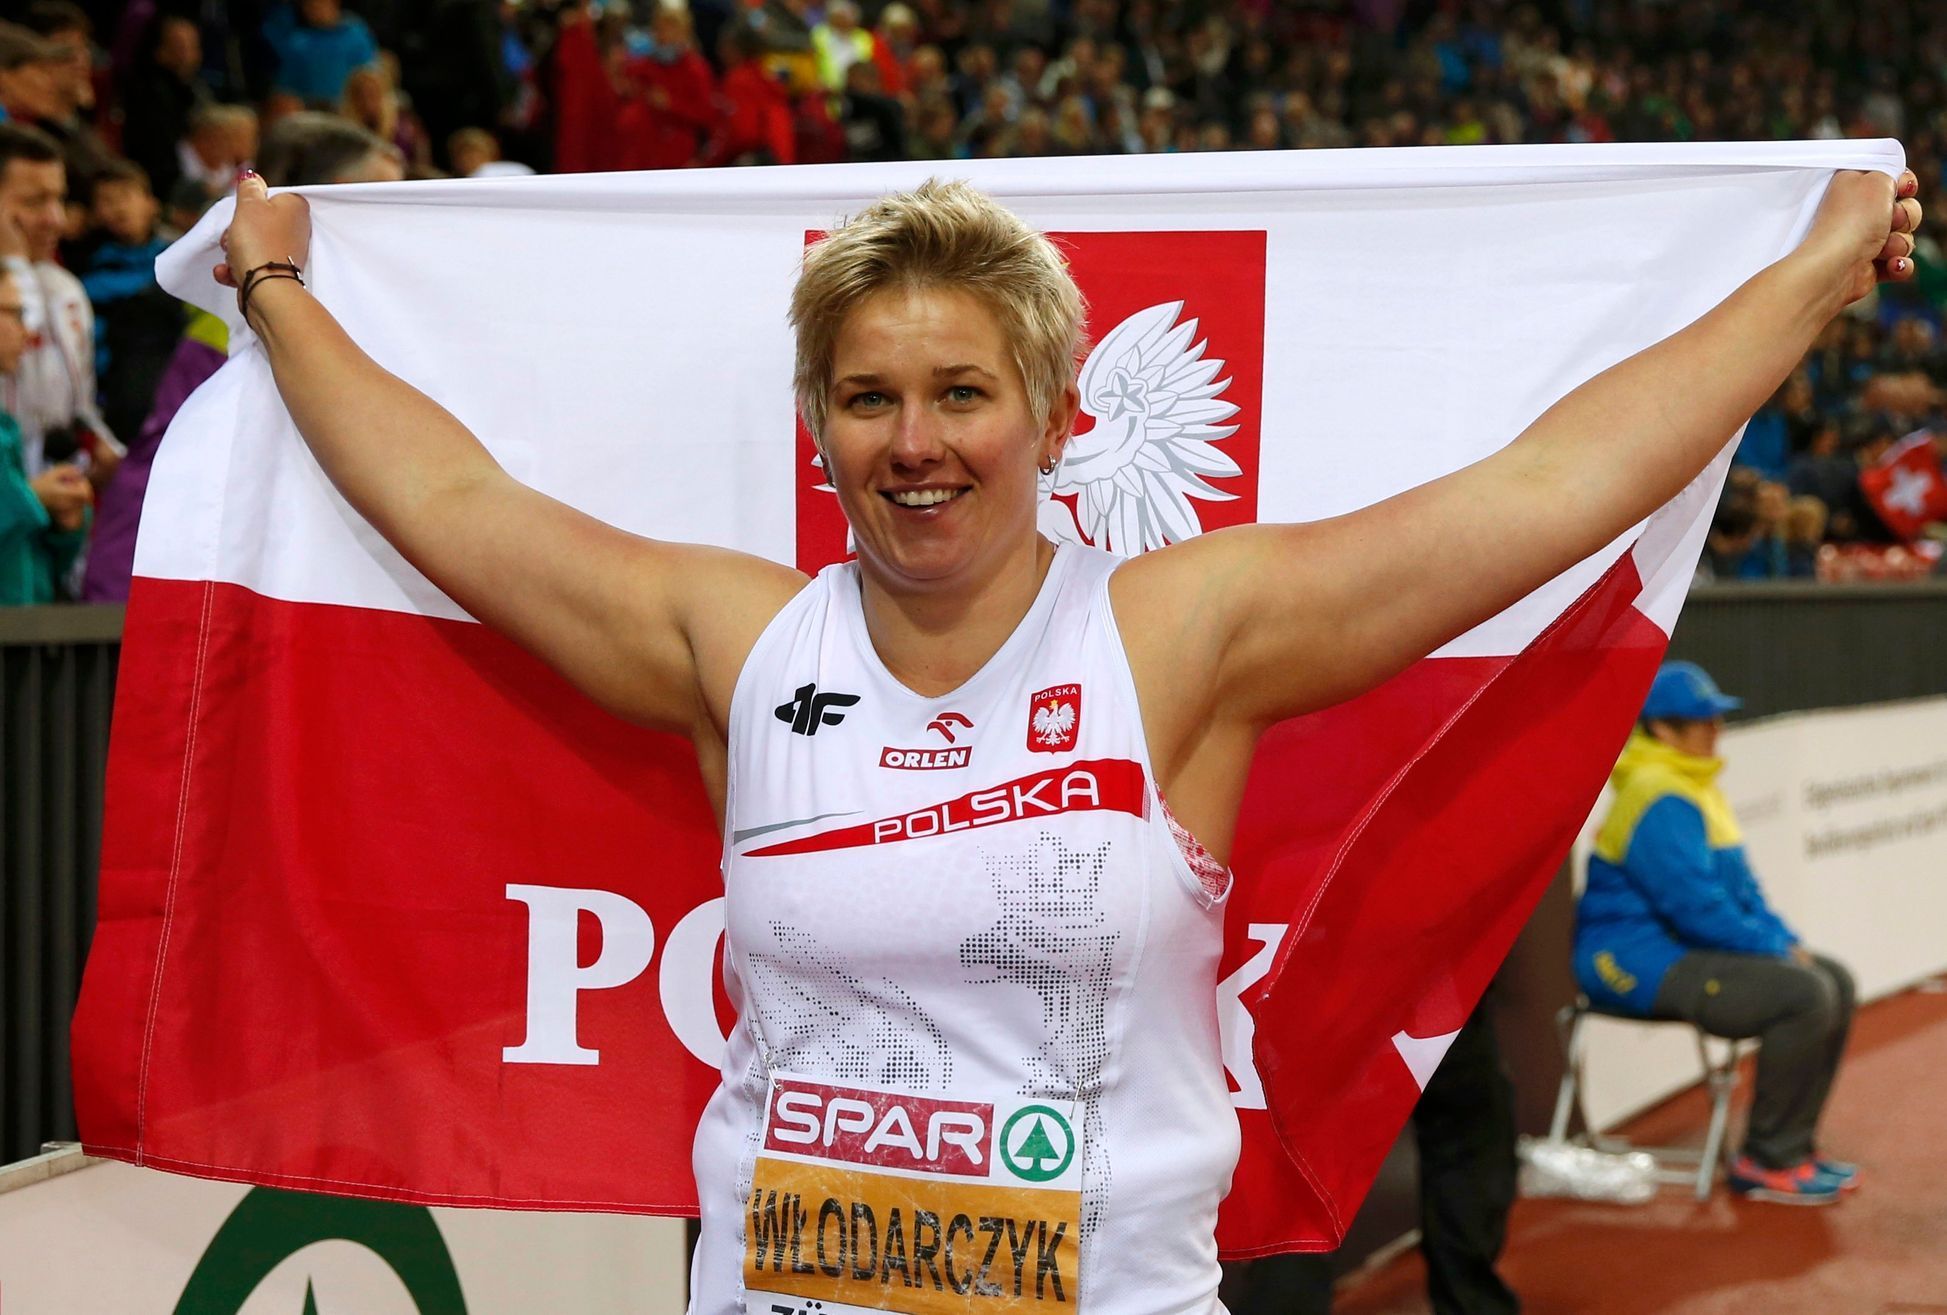 Wlodarczyk of Poland celebrates after winning the women's hammer throw final during European Athletics Championships in Zurich